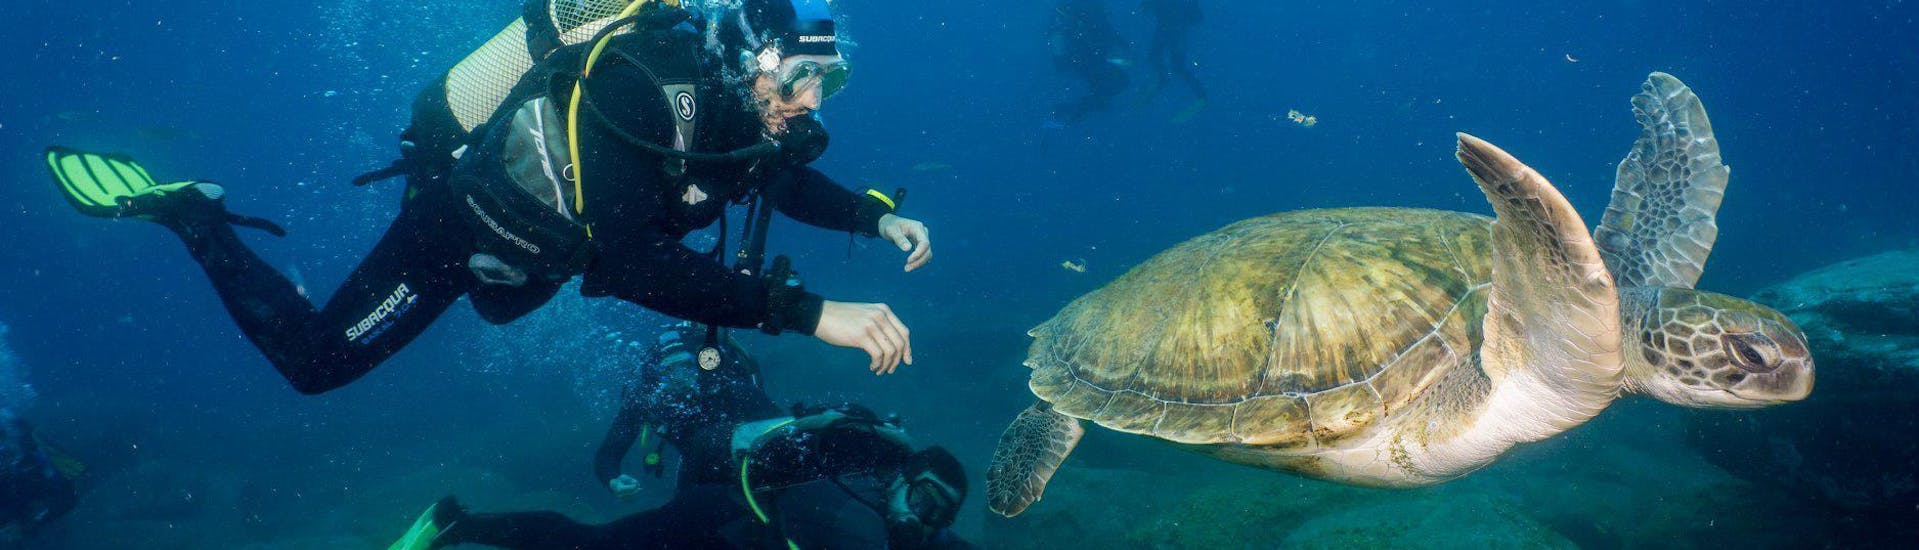 discover-scuba-diving-in-tenerife-aqua-marina-dive-tenerife-hero